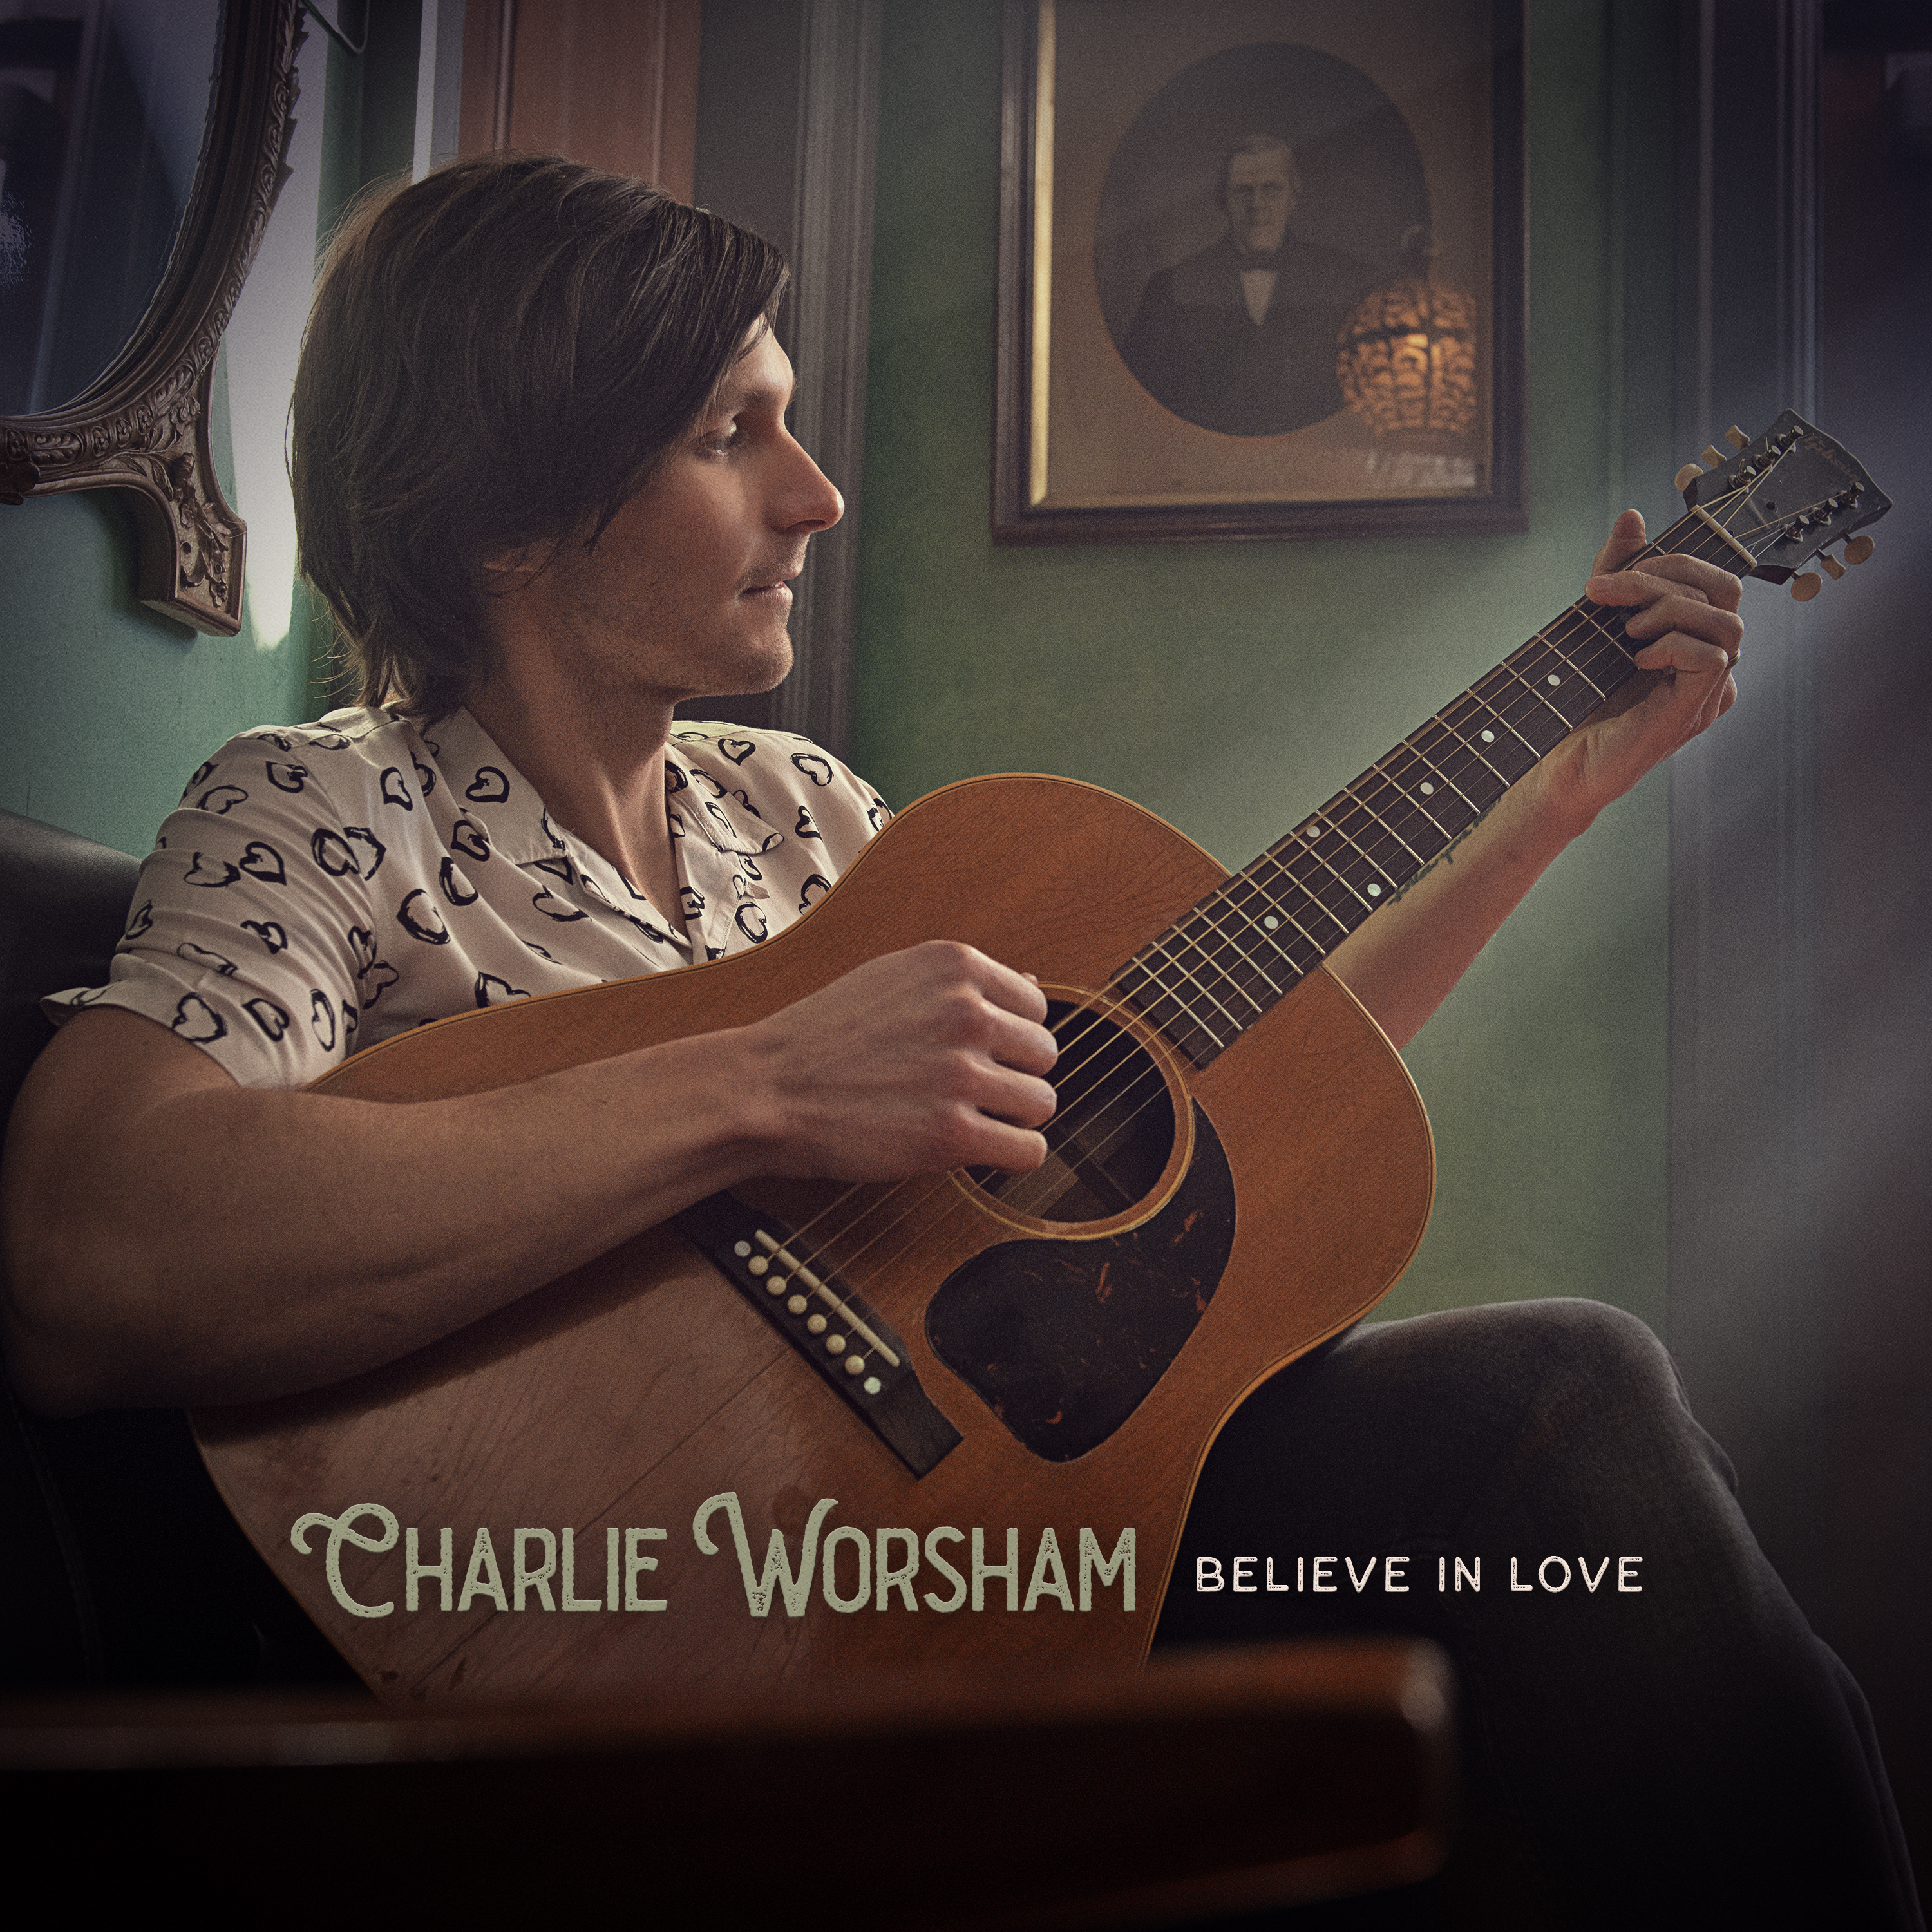 CHARLIE WORSHAM’S “BELIEVE IN LOVE” DEBUTS TODAY